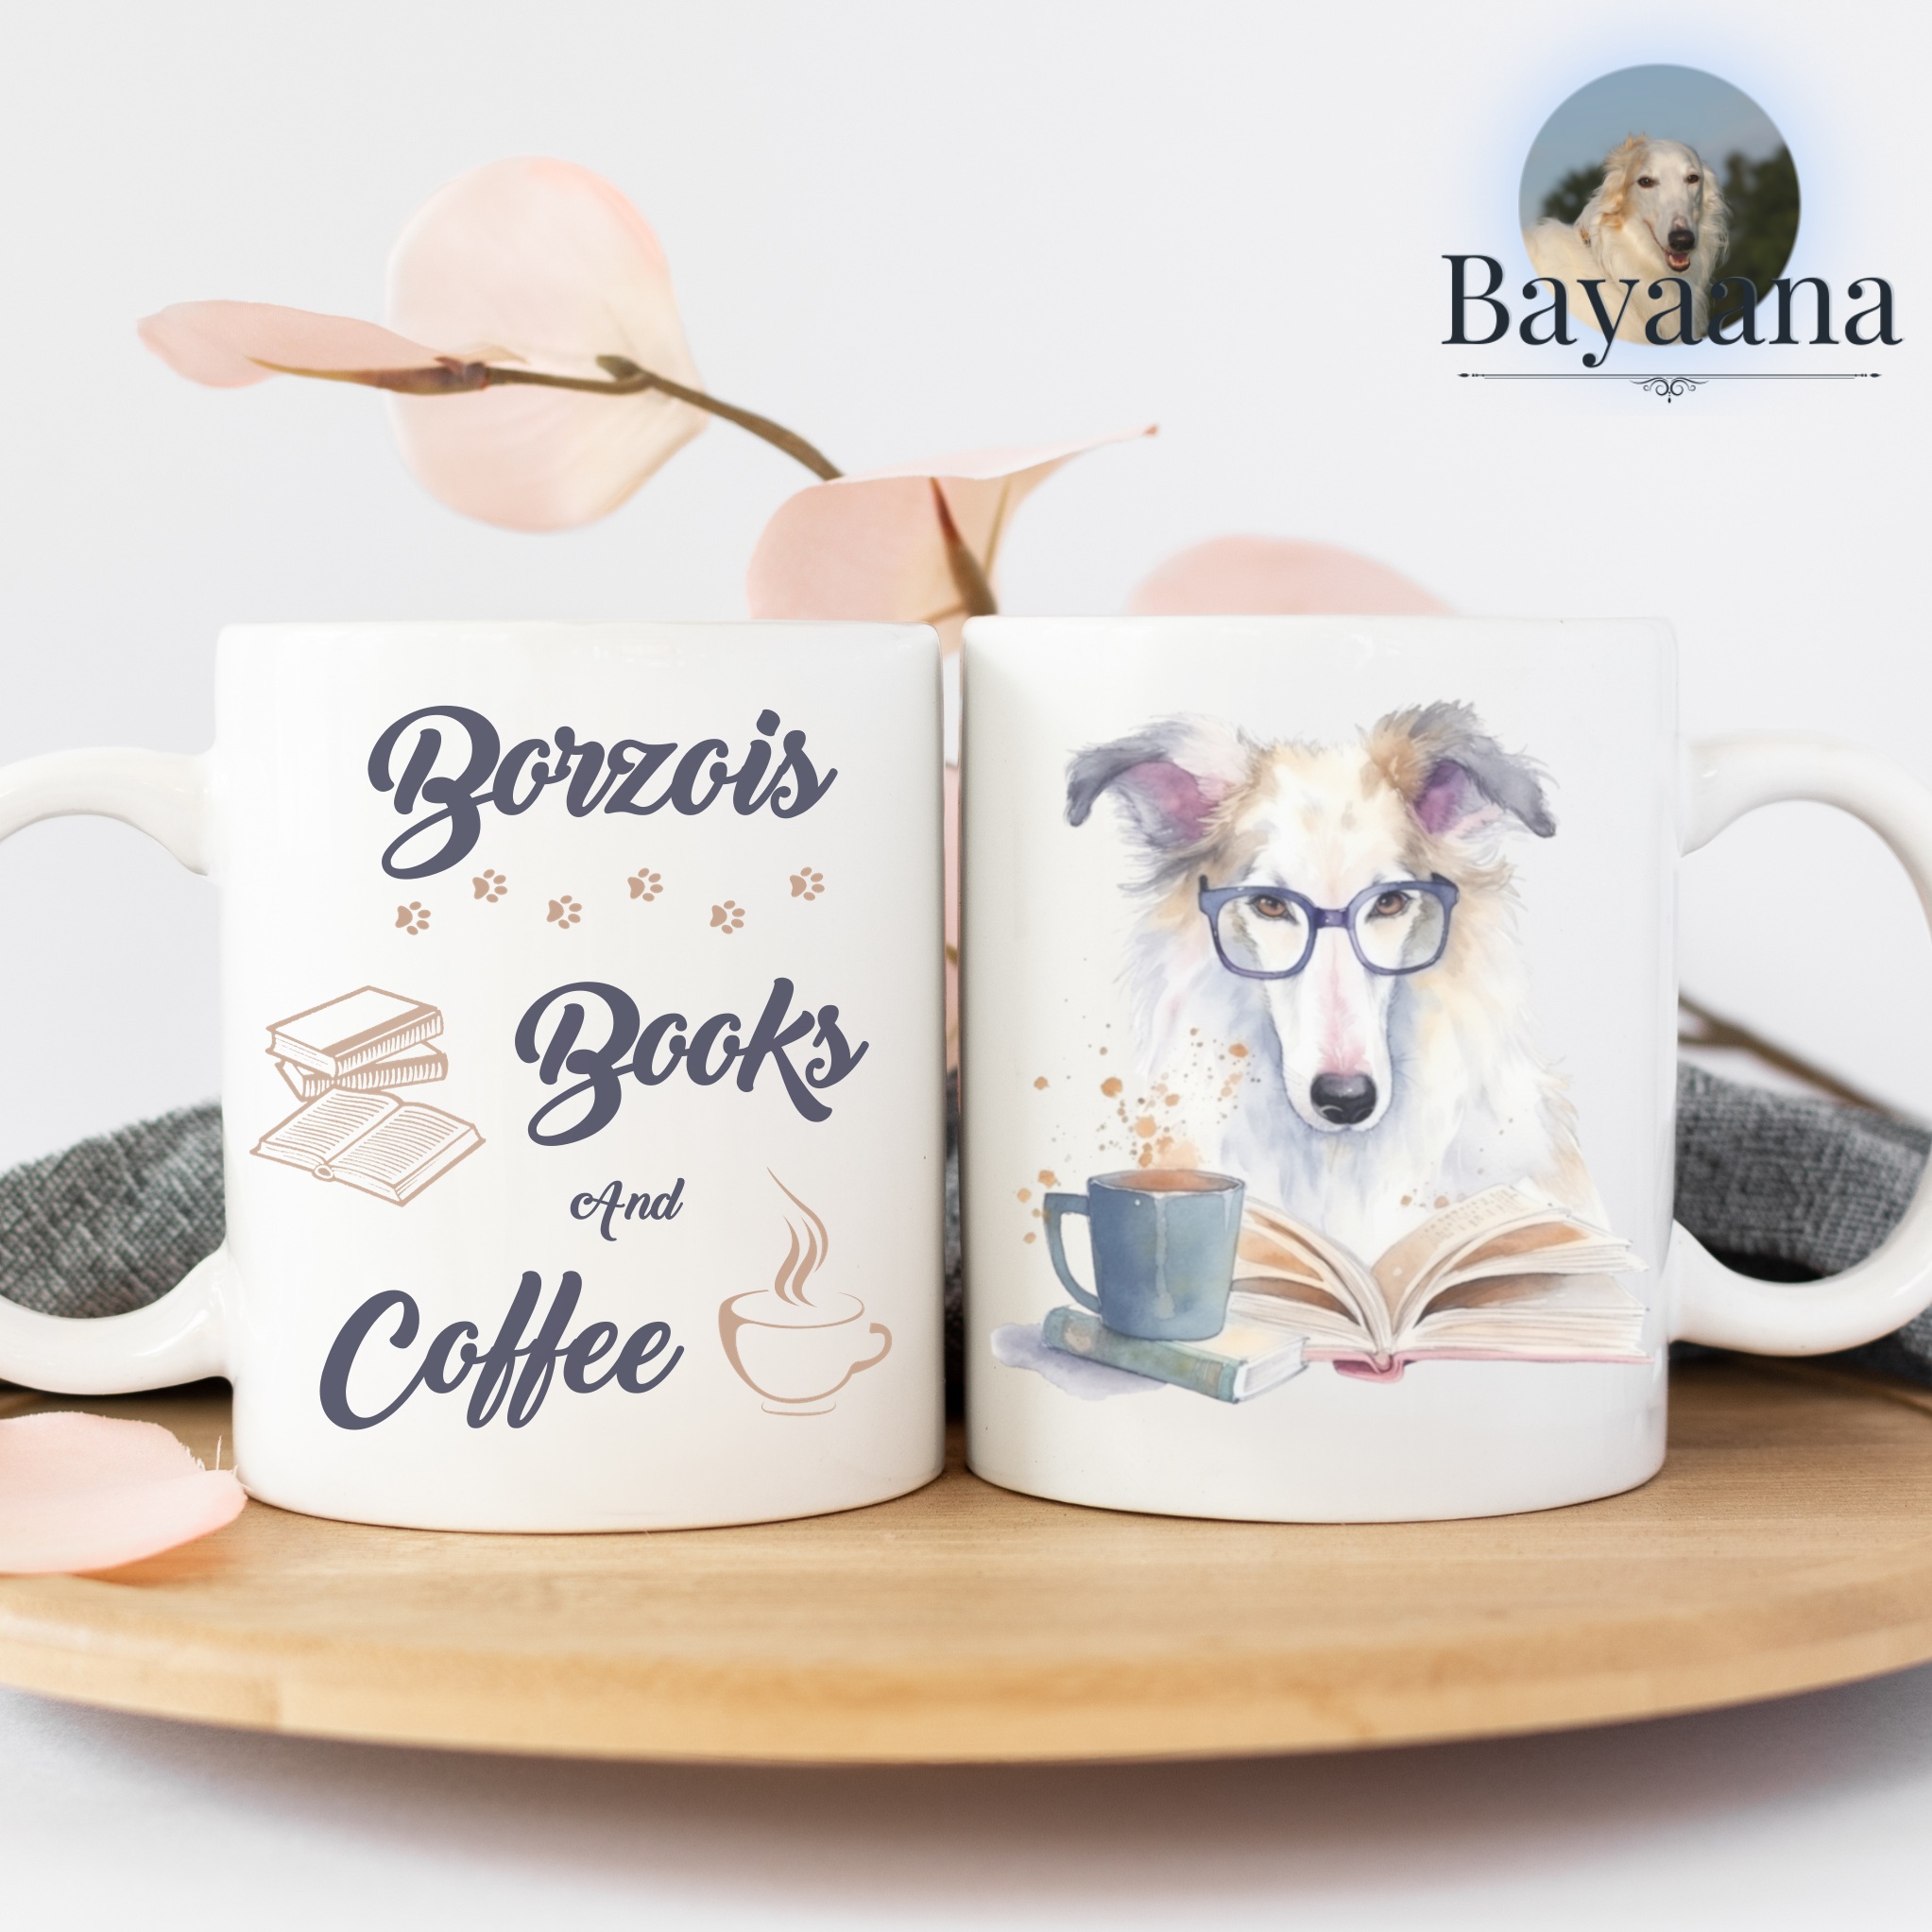 Borzois Books and Coffee mug